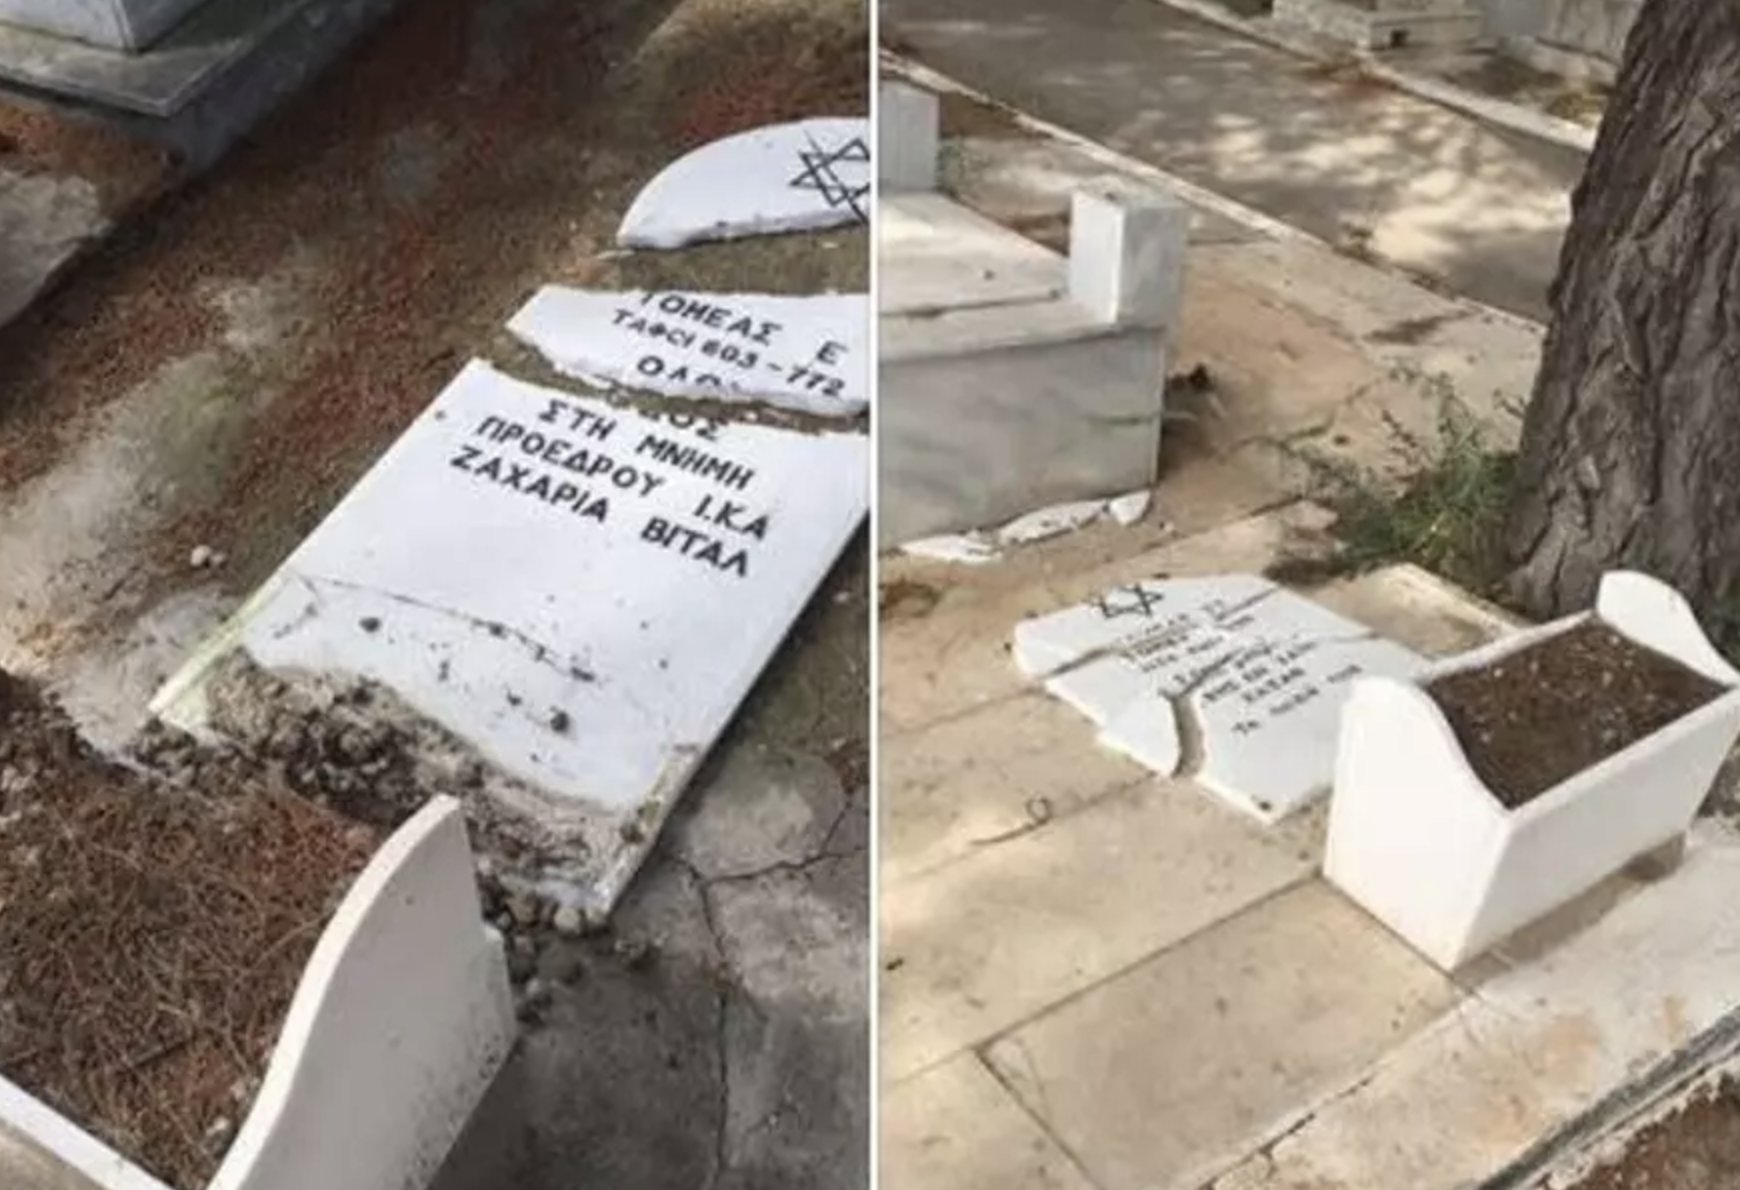 RIVLIN CONDEMNS DESECRATION OF HOLOCAUST MEMORIAL IN GREECE